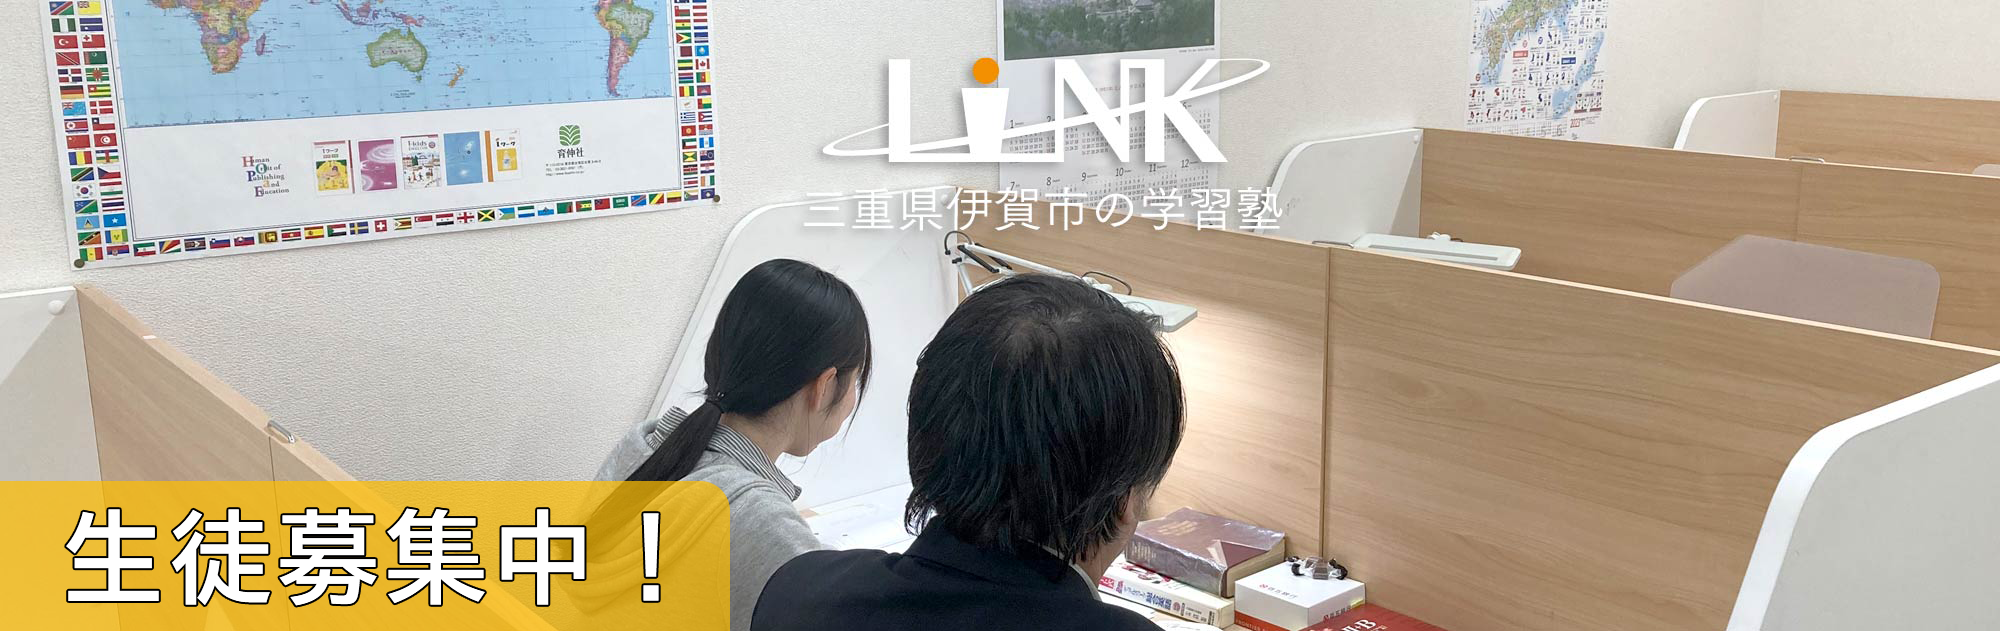 伊賀市の学習塾LINK